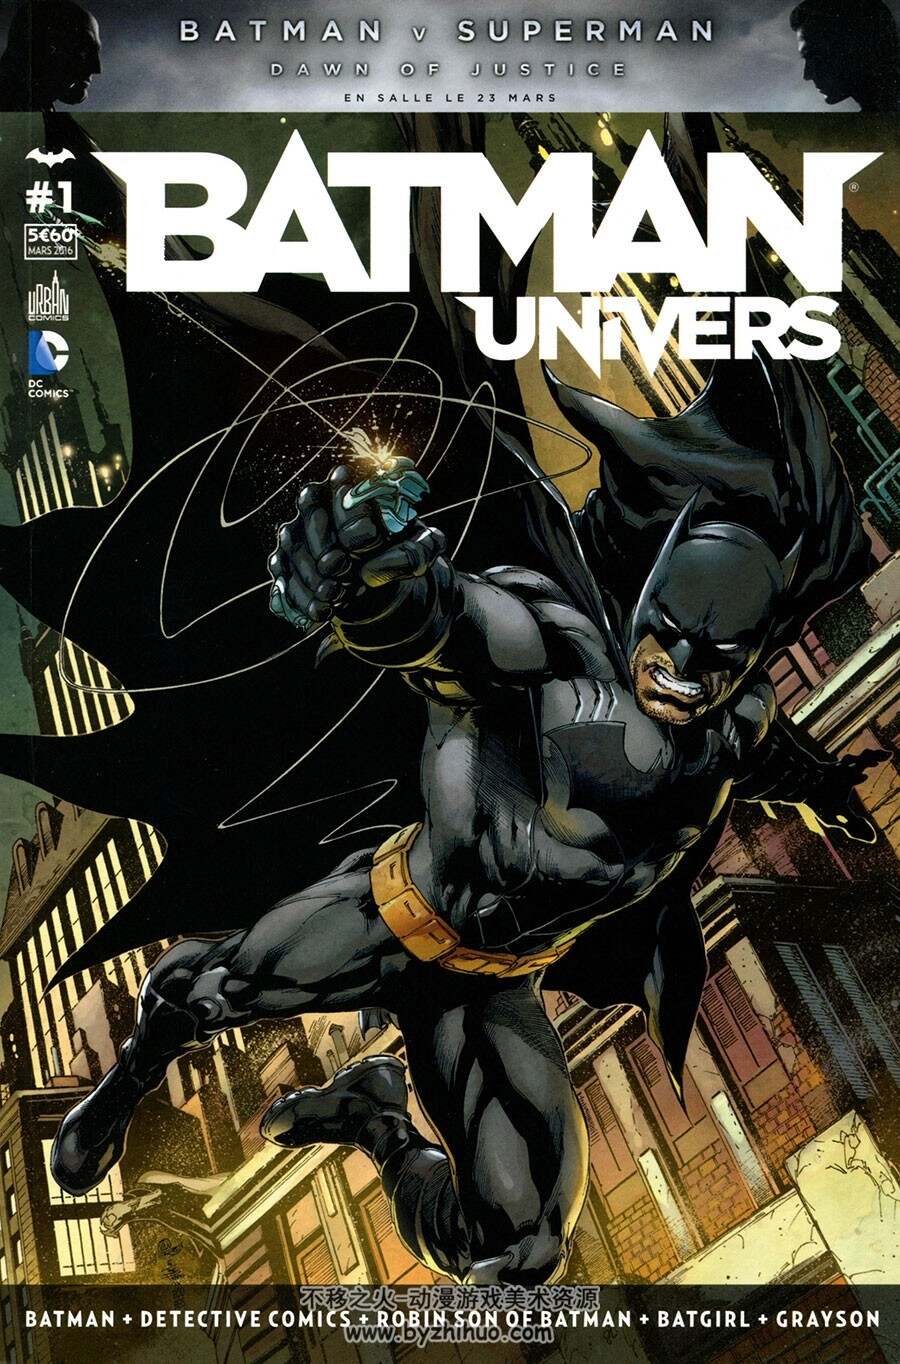 Batman Universv 1-2册 Scott Snyder - Greg Capullo DC超级英雄漫画 法语版